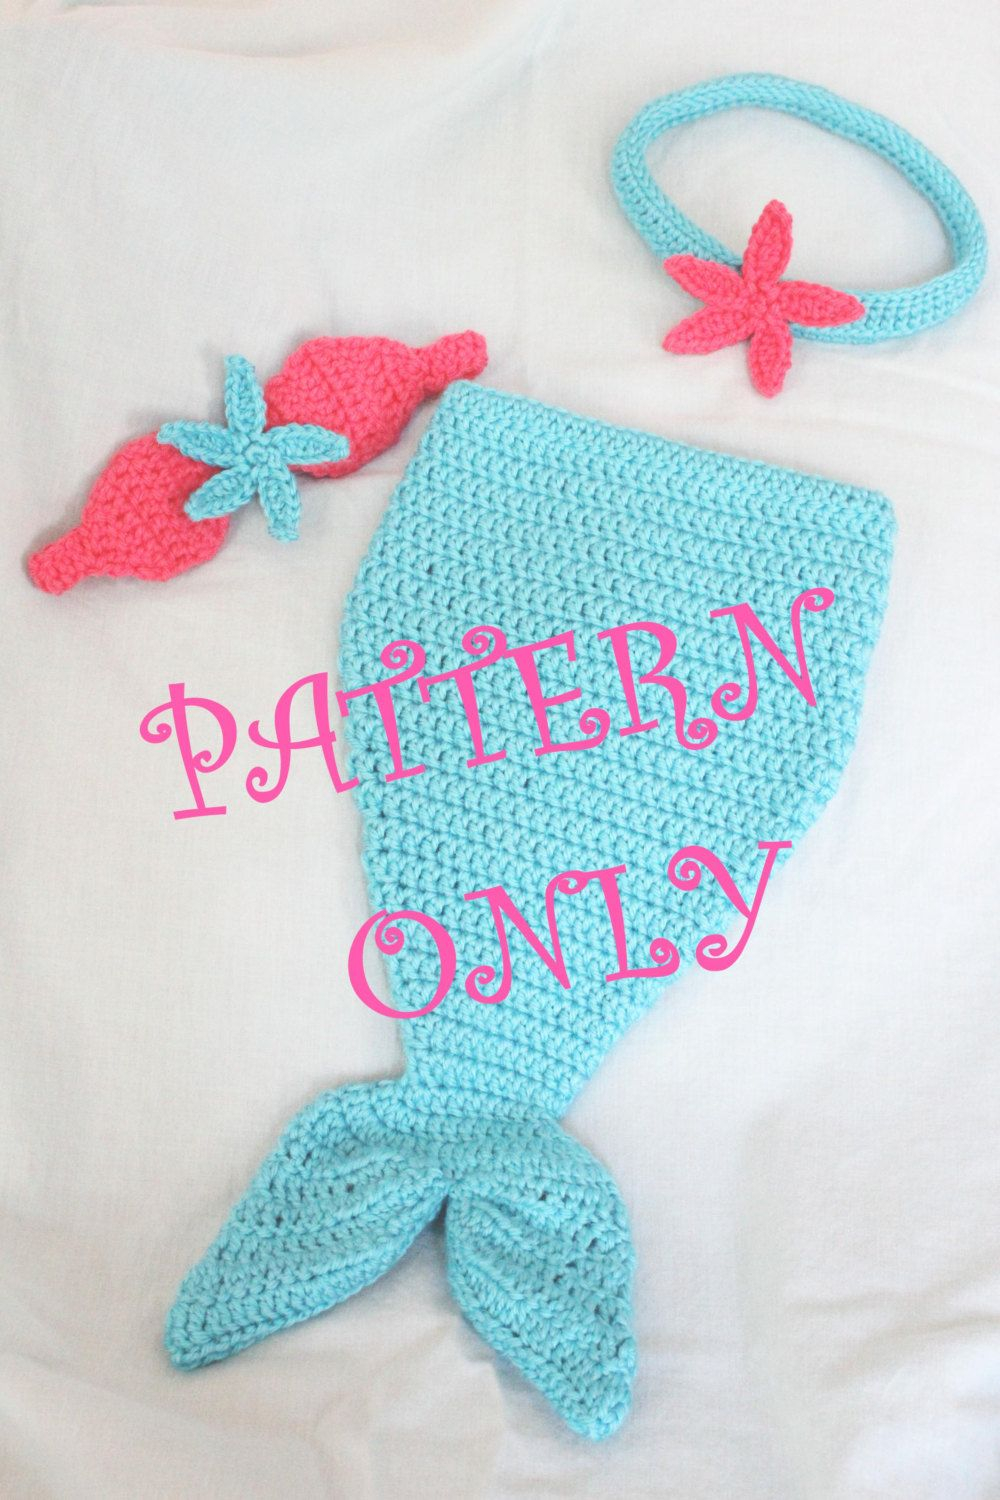 Mermaid Crochet Pattern For Baby Pattern Crochet Mermaid Tail With Starfish Top Stitchinprincess